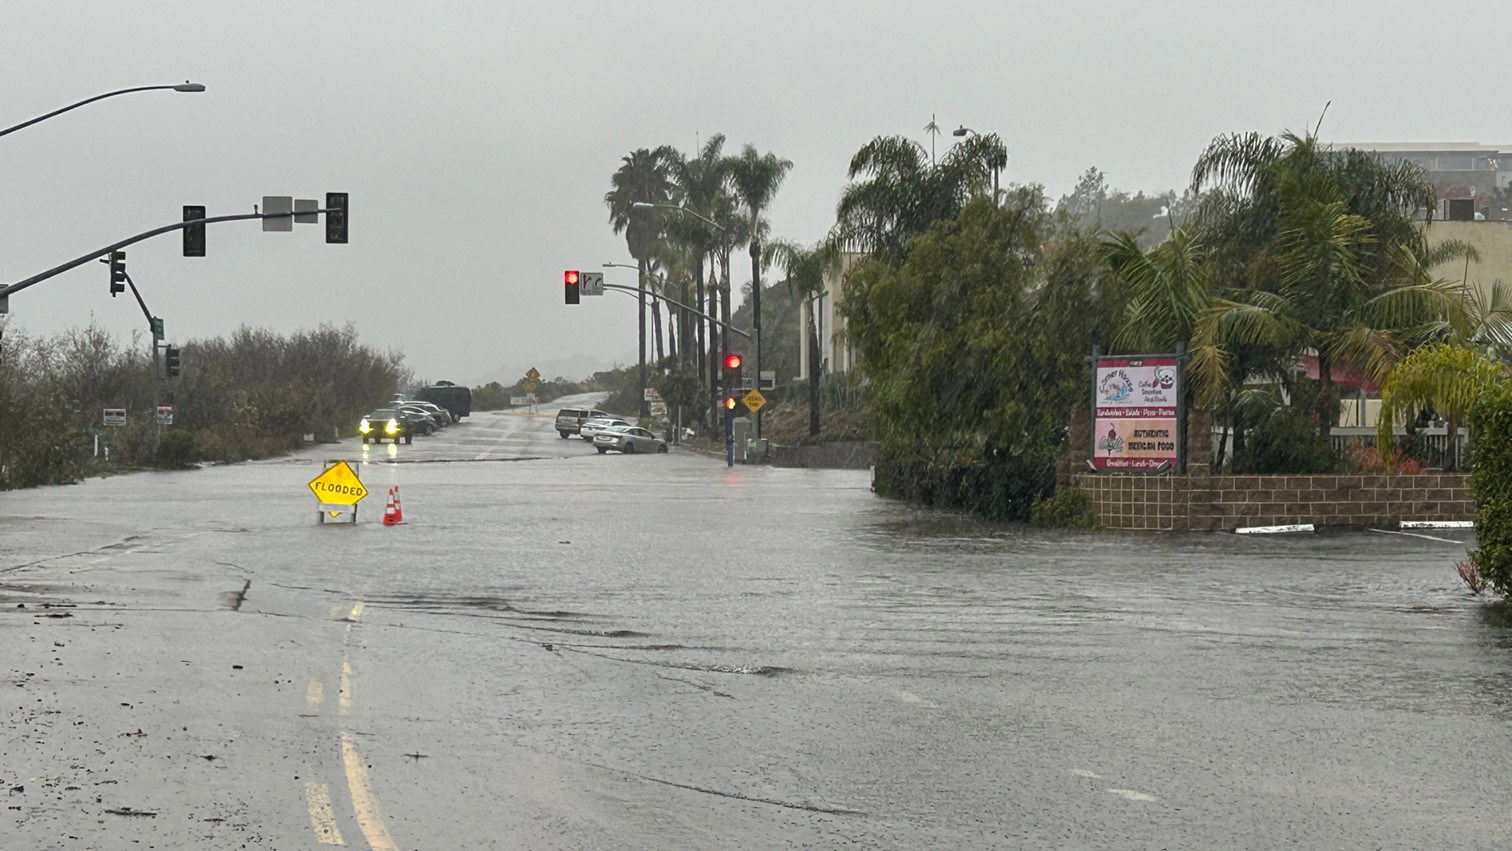 San Diego mayor declares state of emergency after heavy rain, flooding